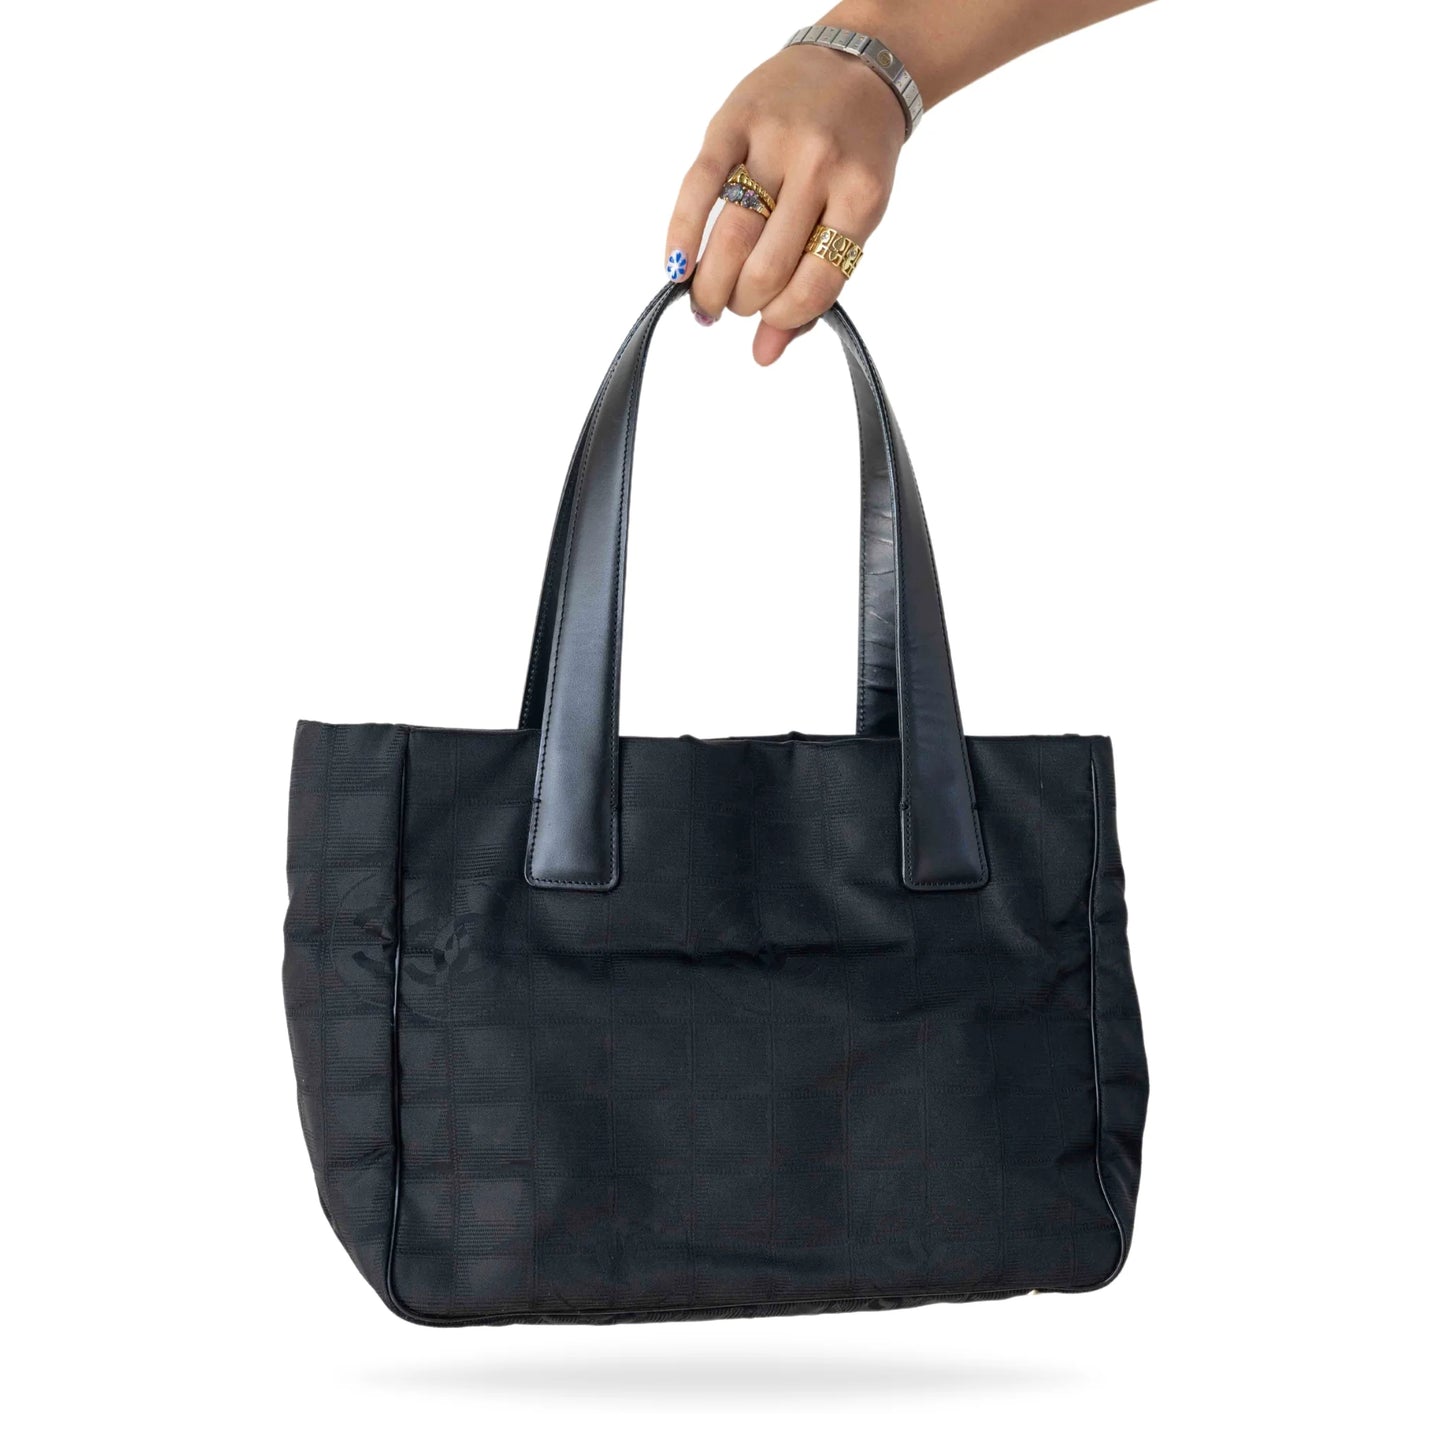 Chanel Travel Nylon Tote Bag